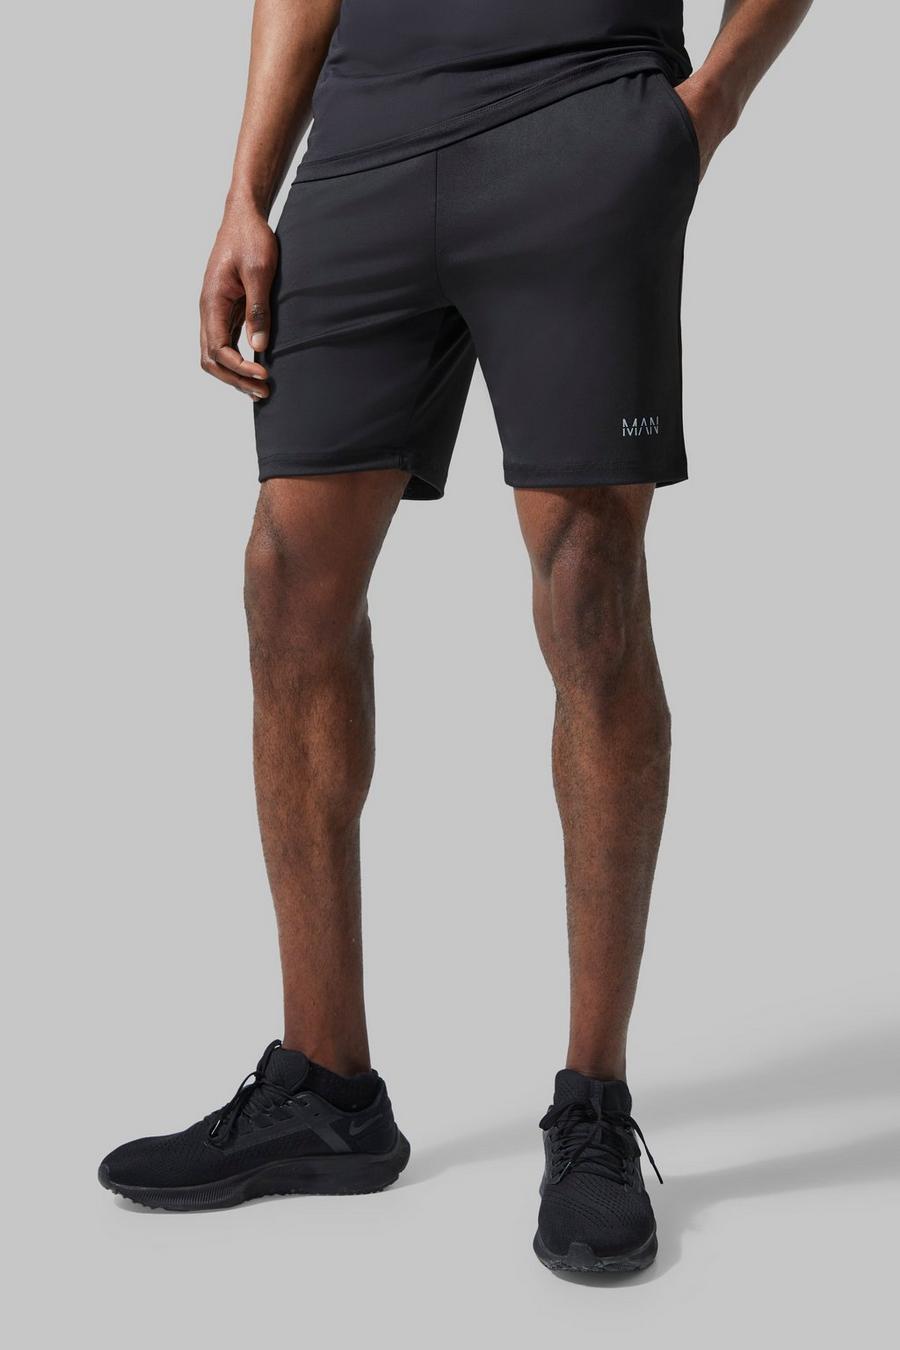 Black Man Active Performance Fitness Shorts